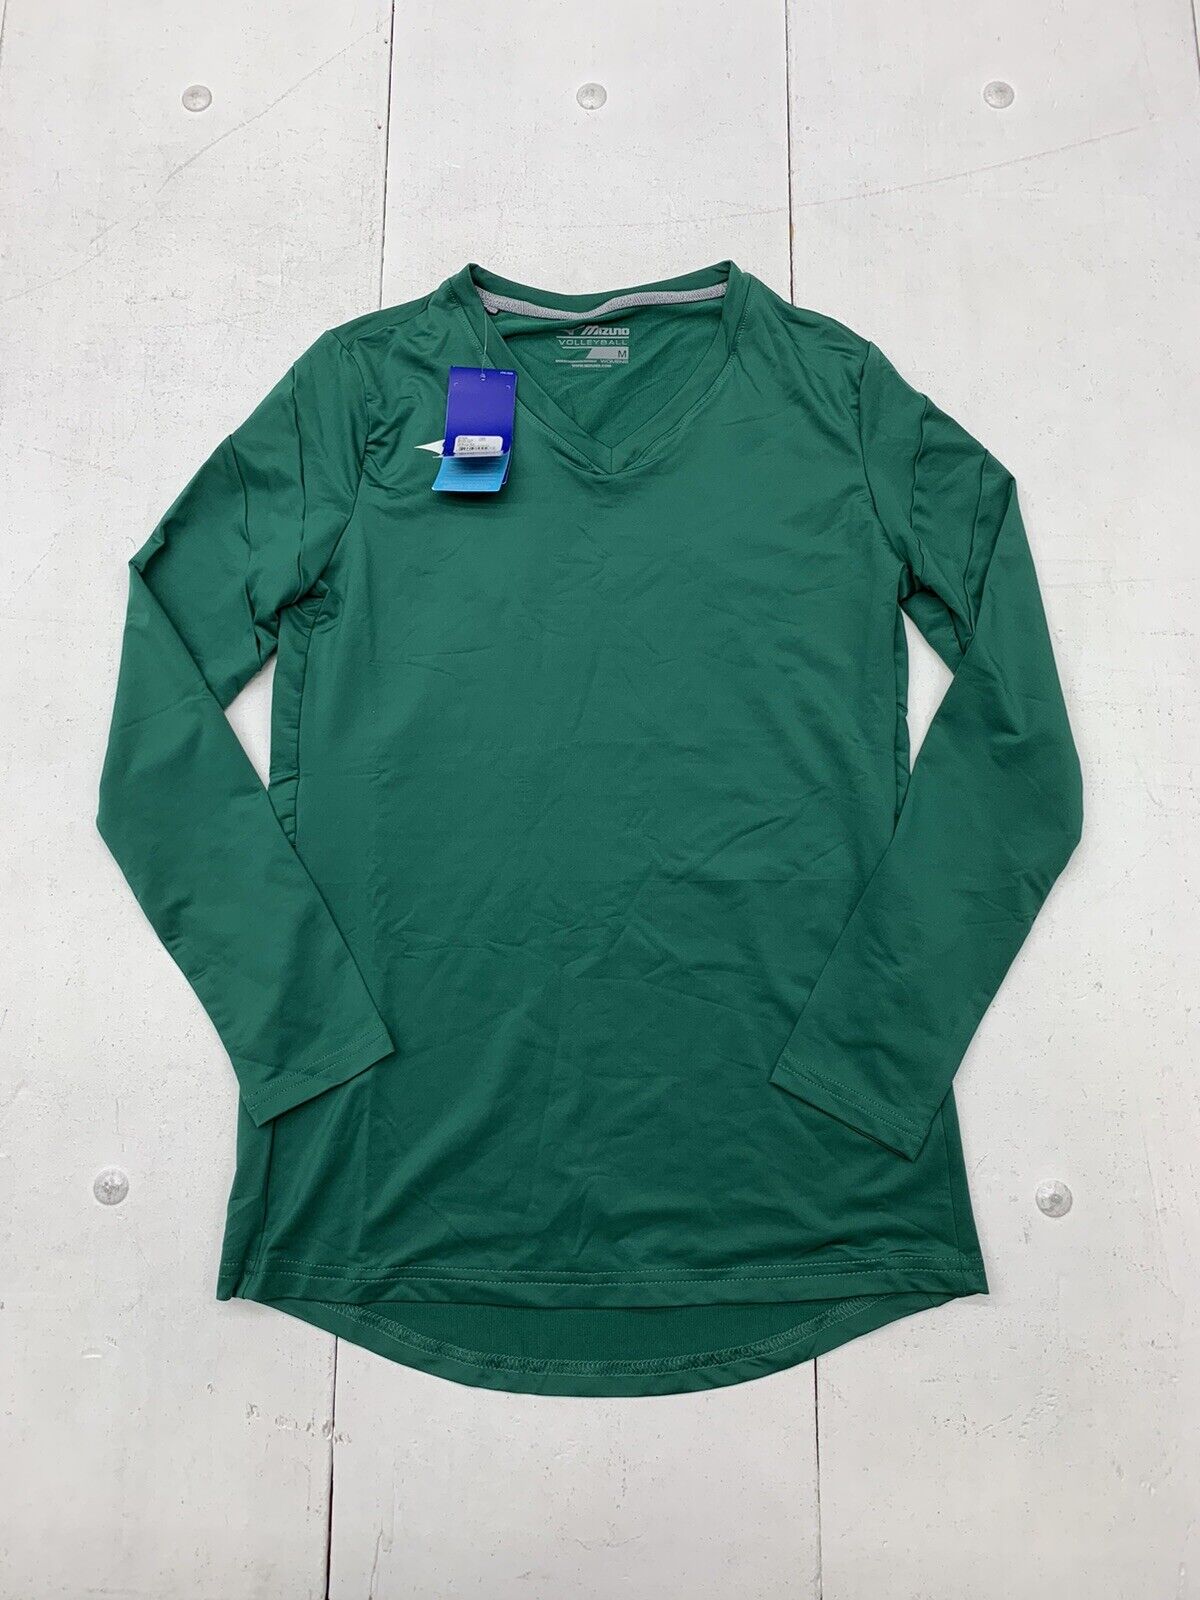 Mizuno Womens Green Long Sleeve Athletic Shirt Size Medium